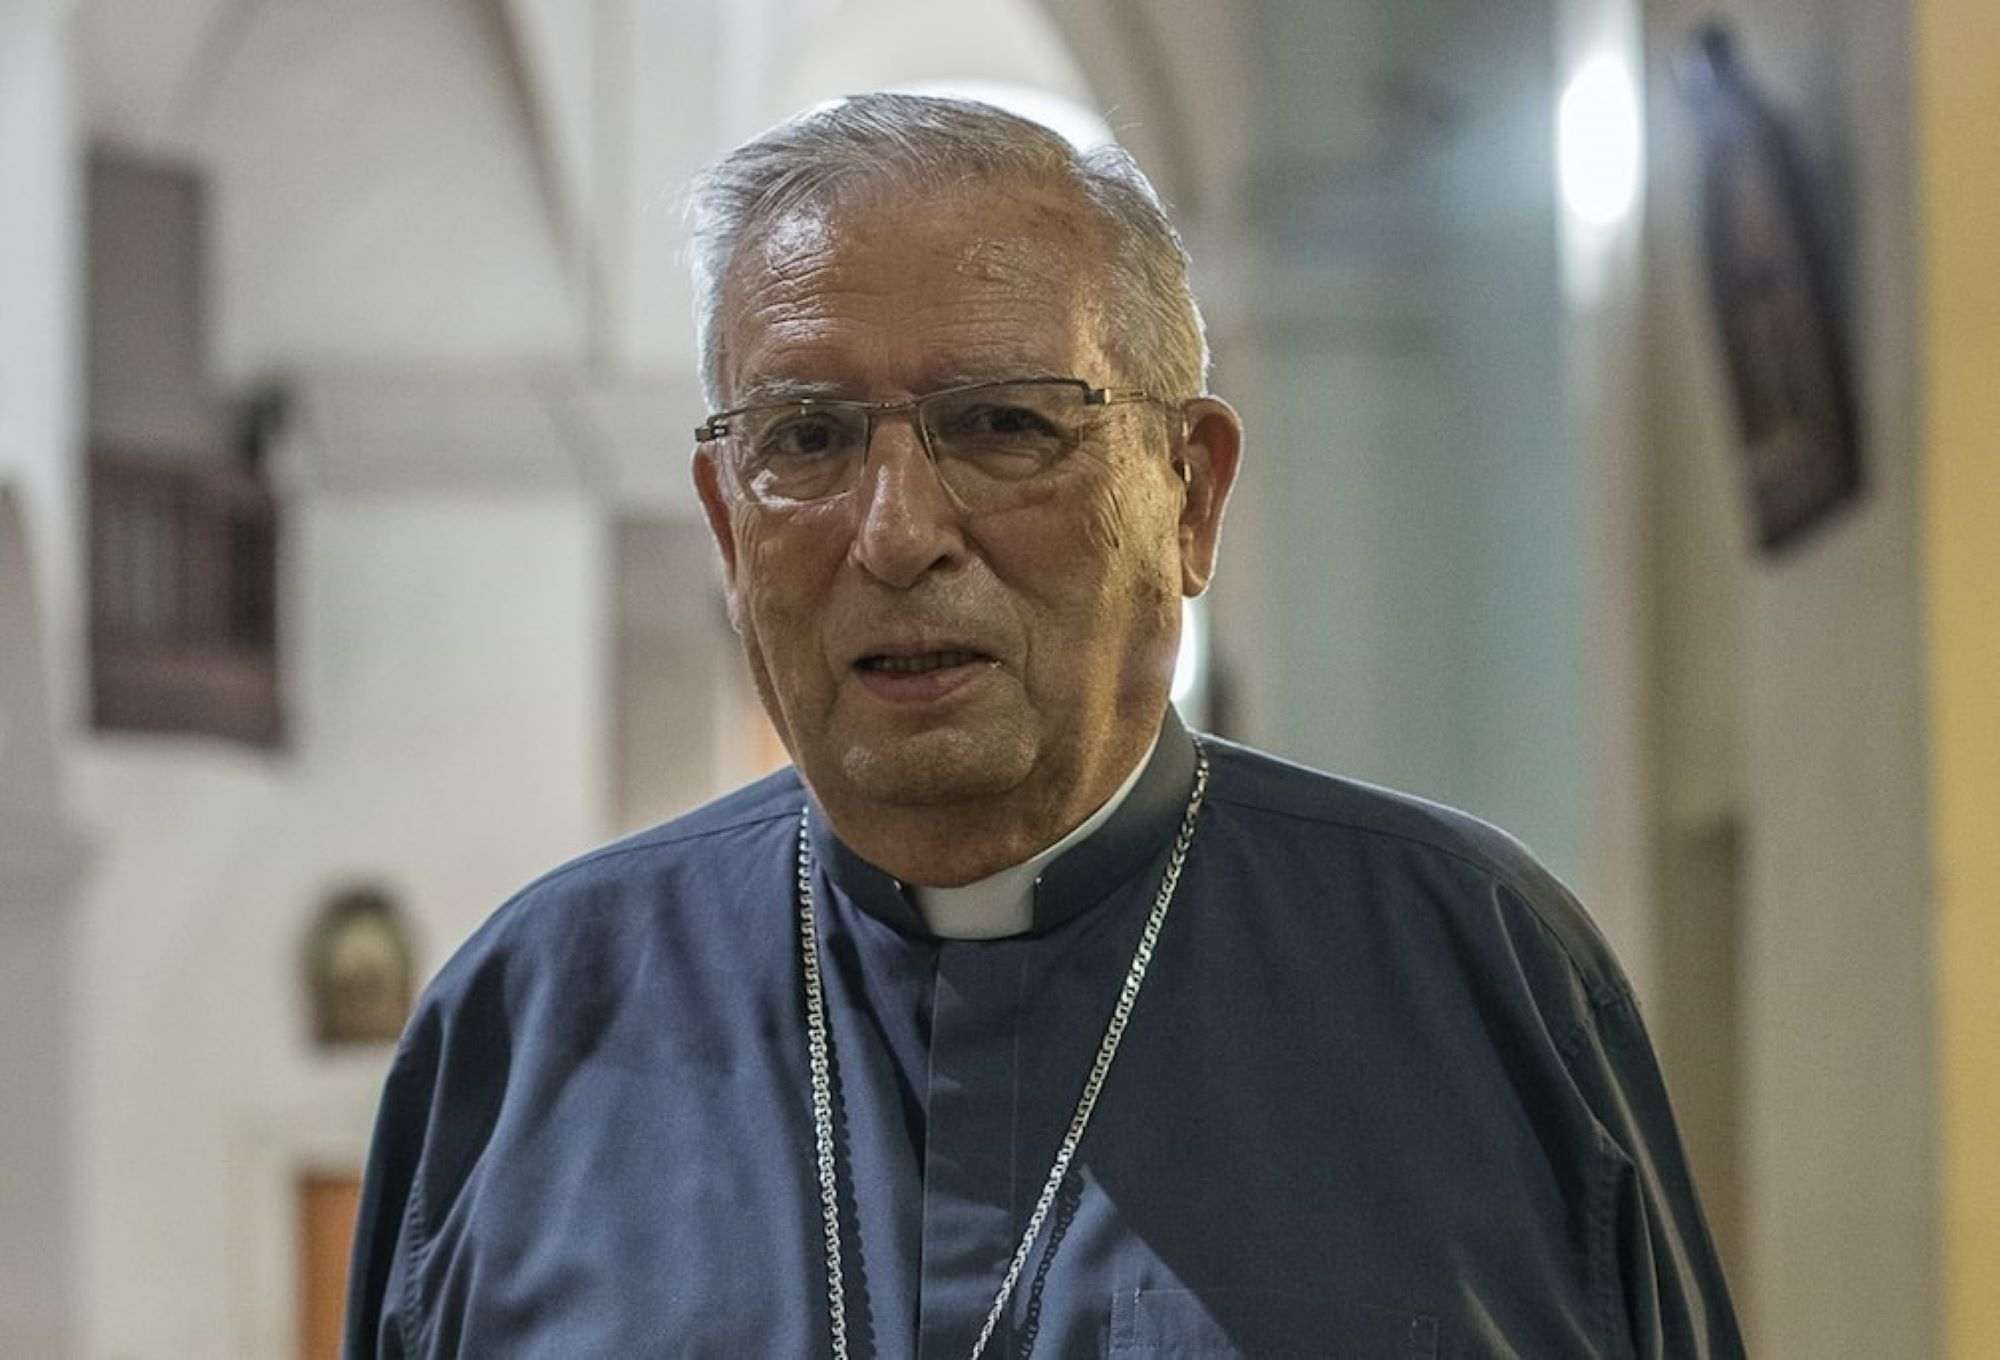 Mor el bisbe emèrit de Girona, Carles Soler, als 91 anys